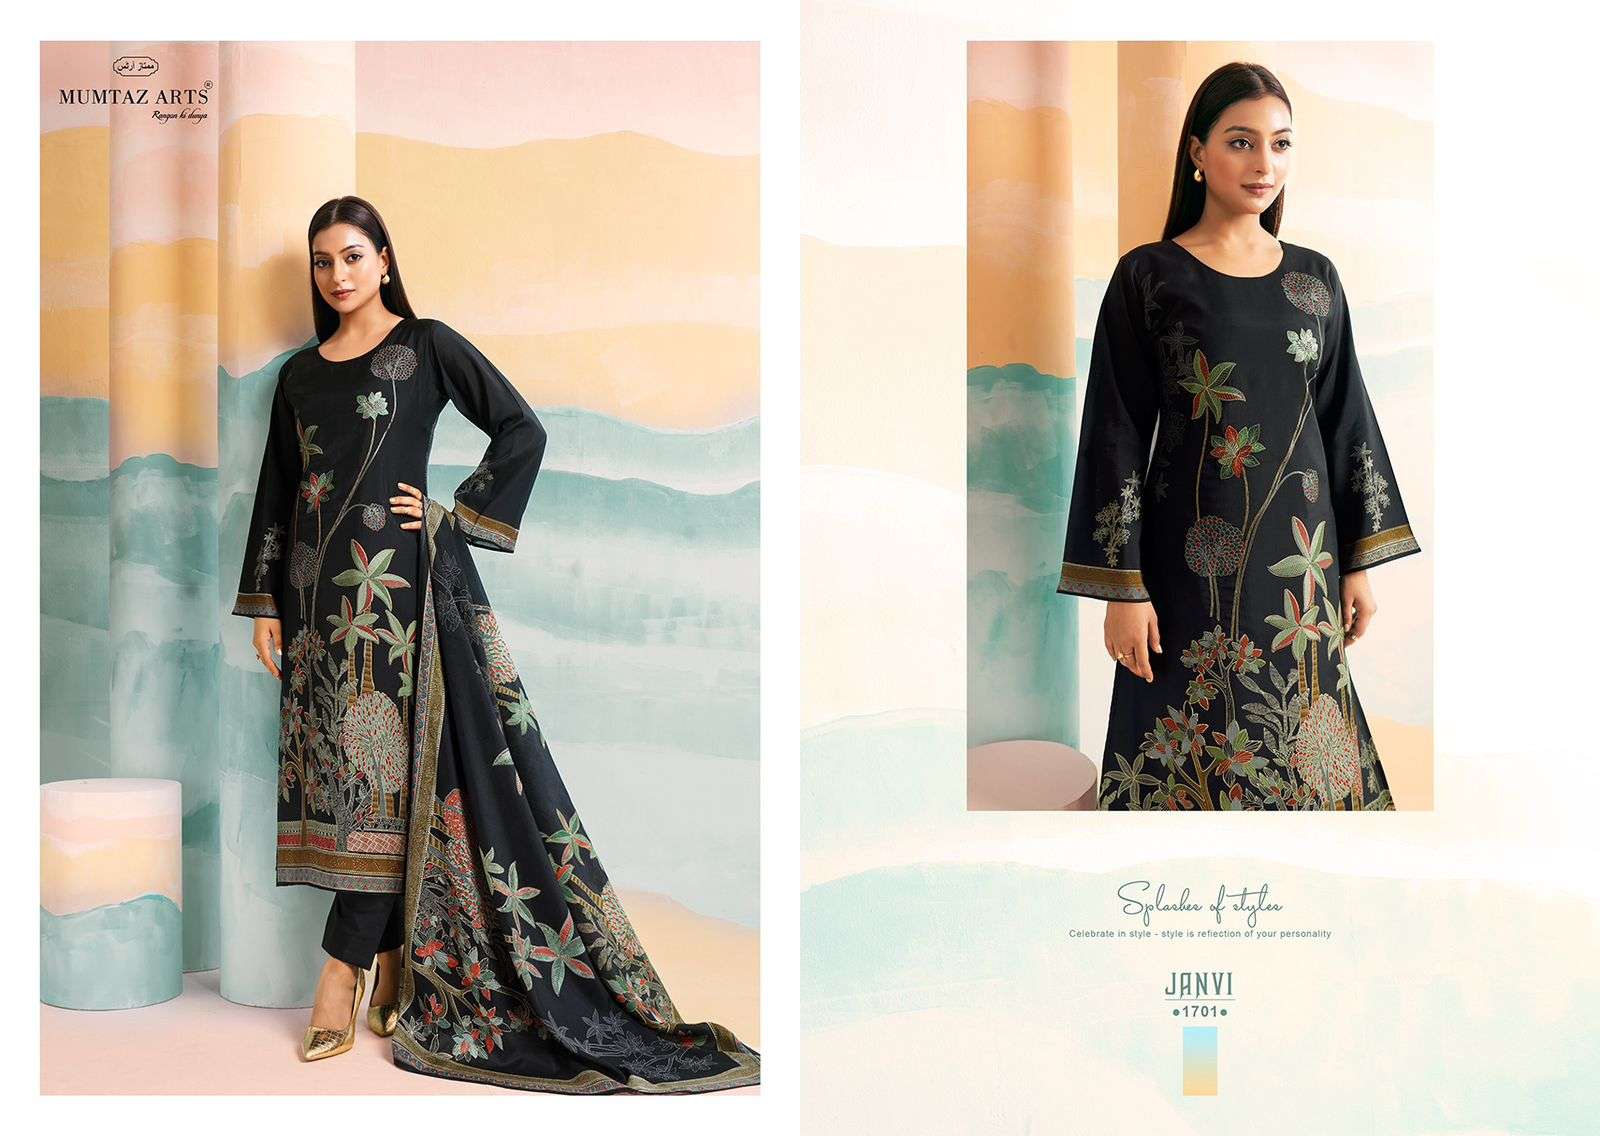 Mumtaz Janvi Vol 2 Muslin Digital Printed Dress Material Wholesale catalog